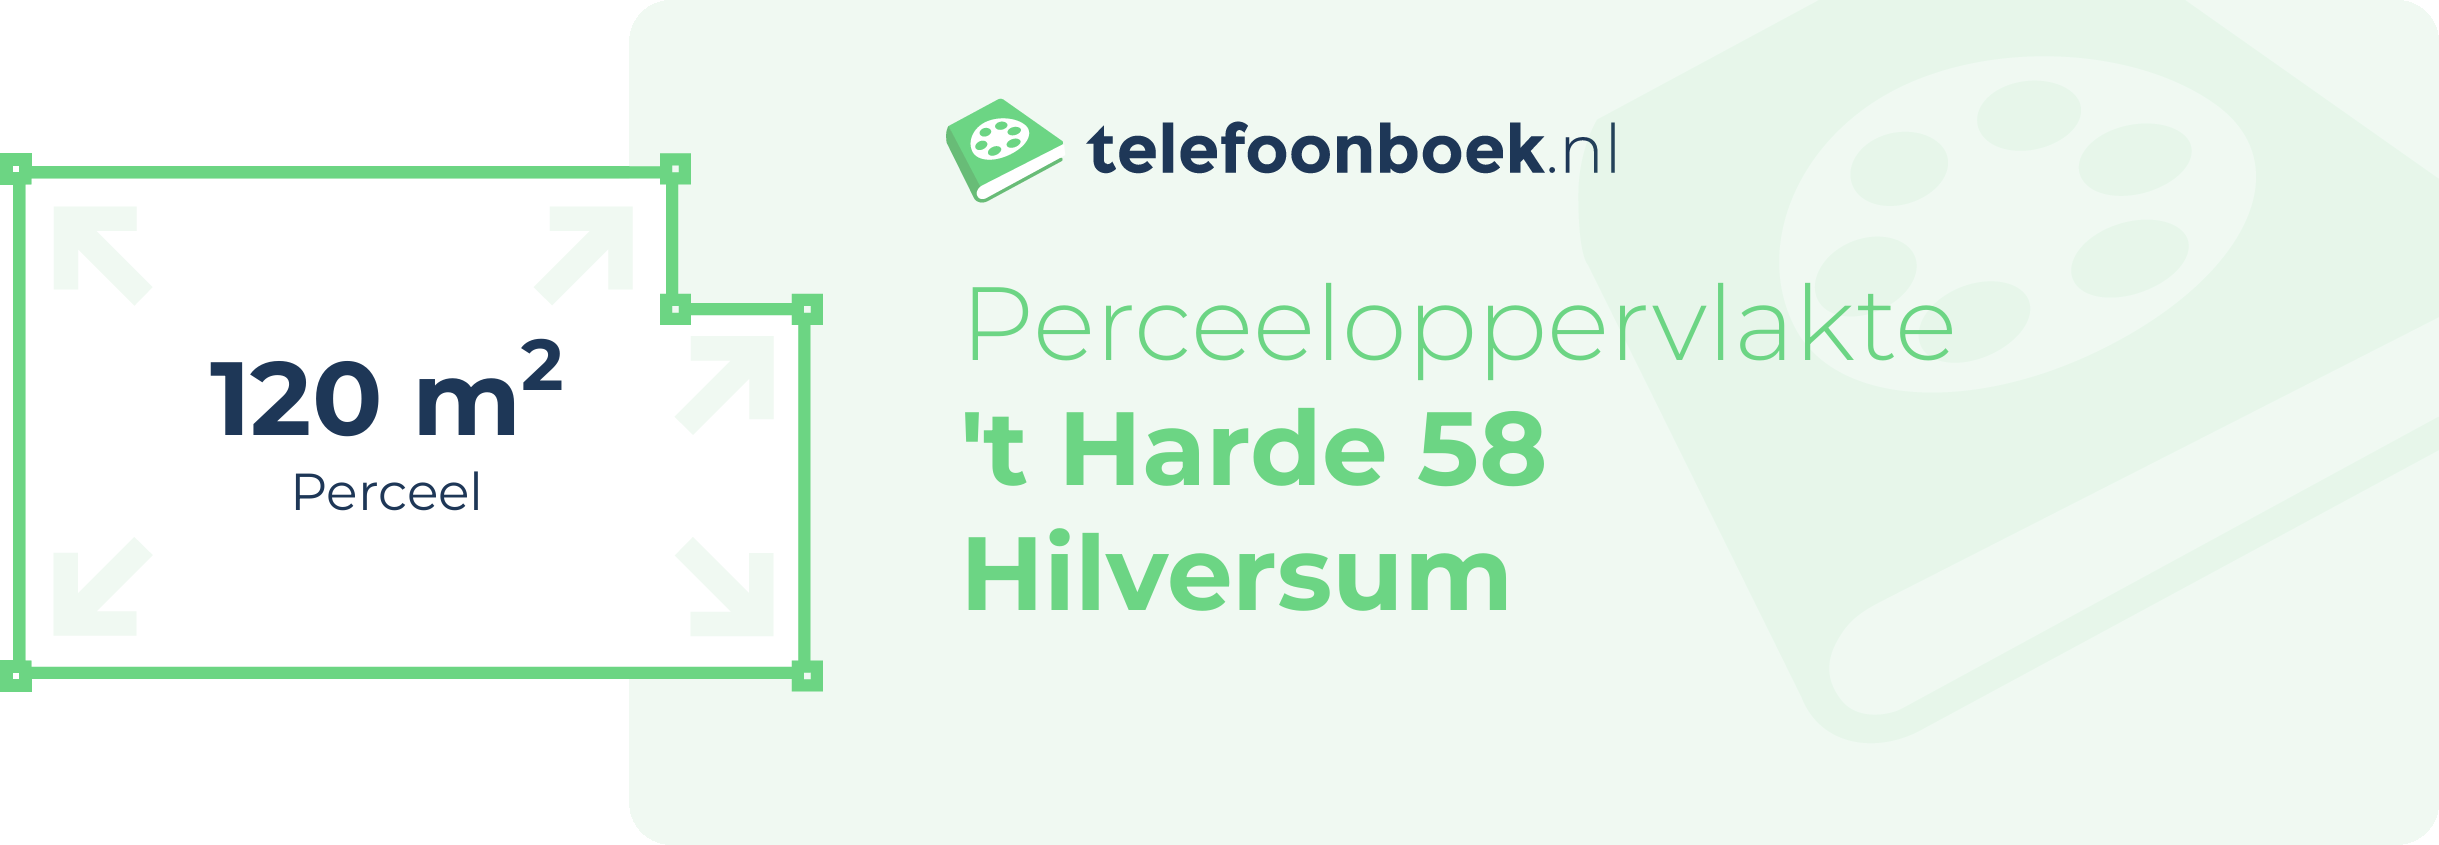 Perceeloppervlakte 't Harde 58 Hilversum